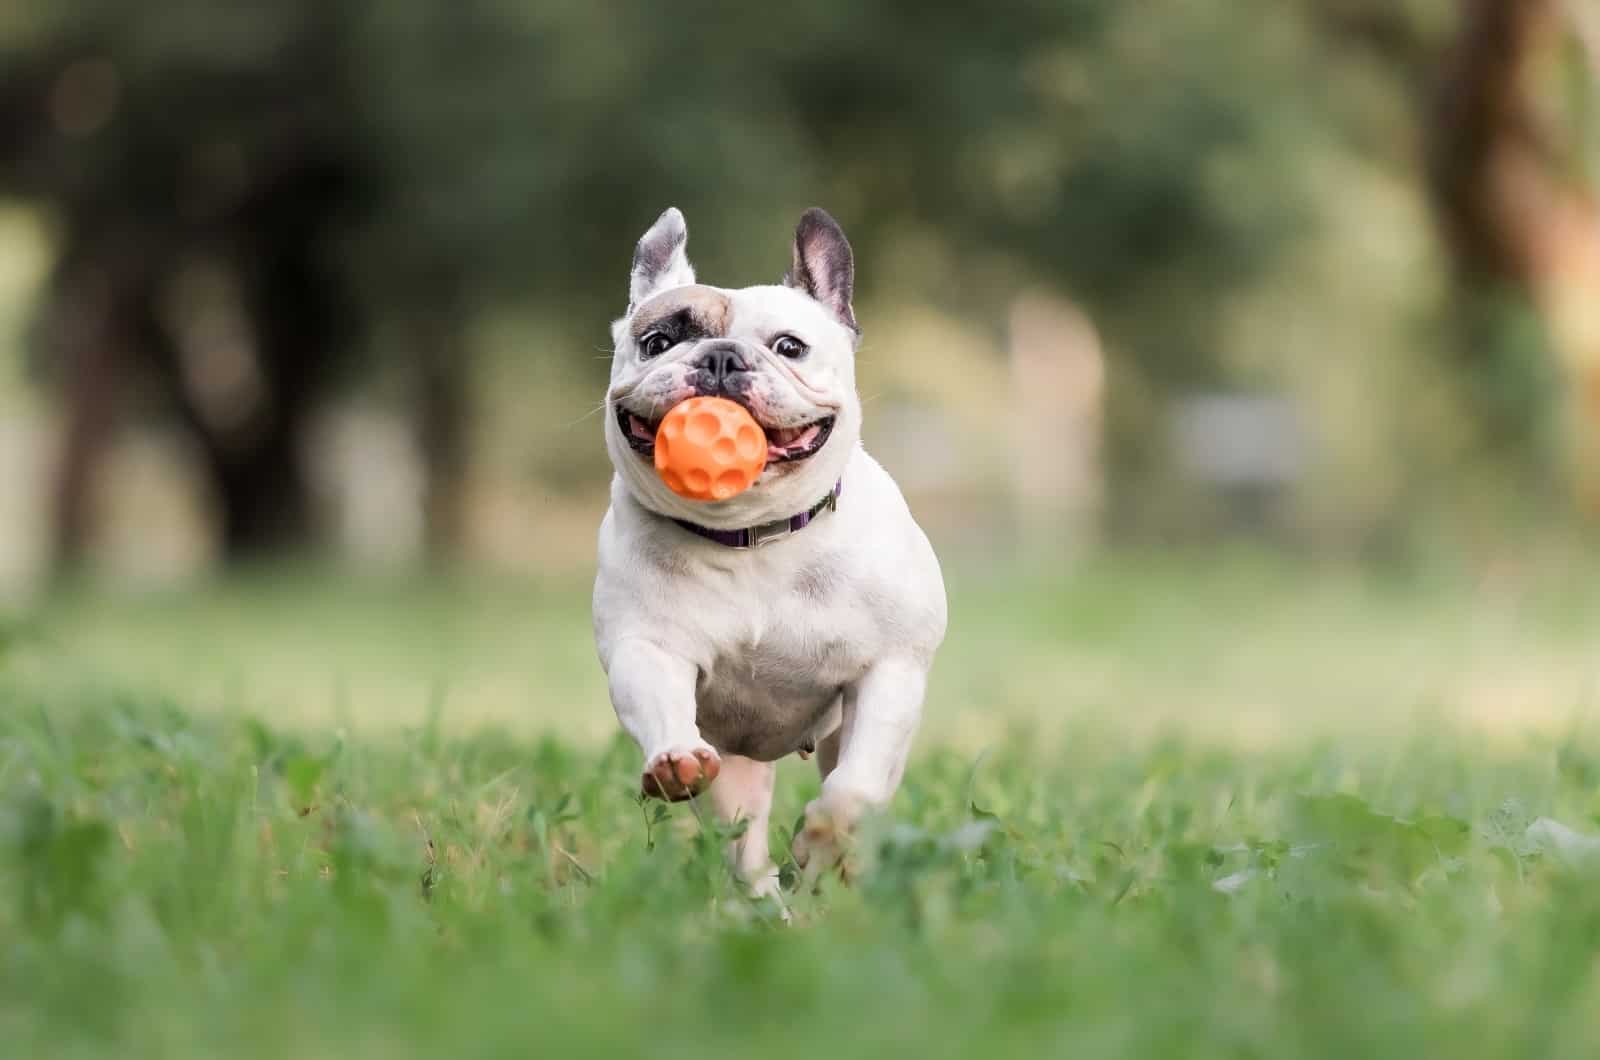 French Bulldog running on grass